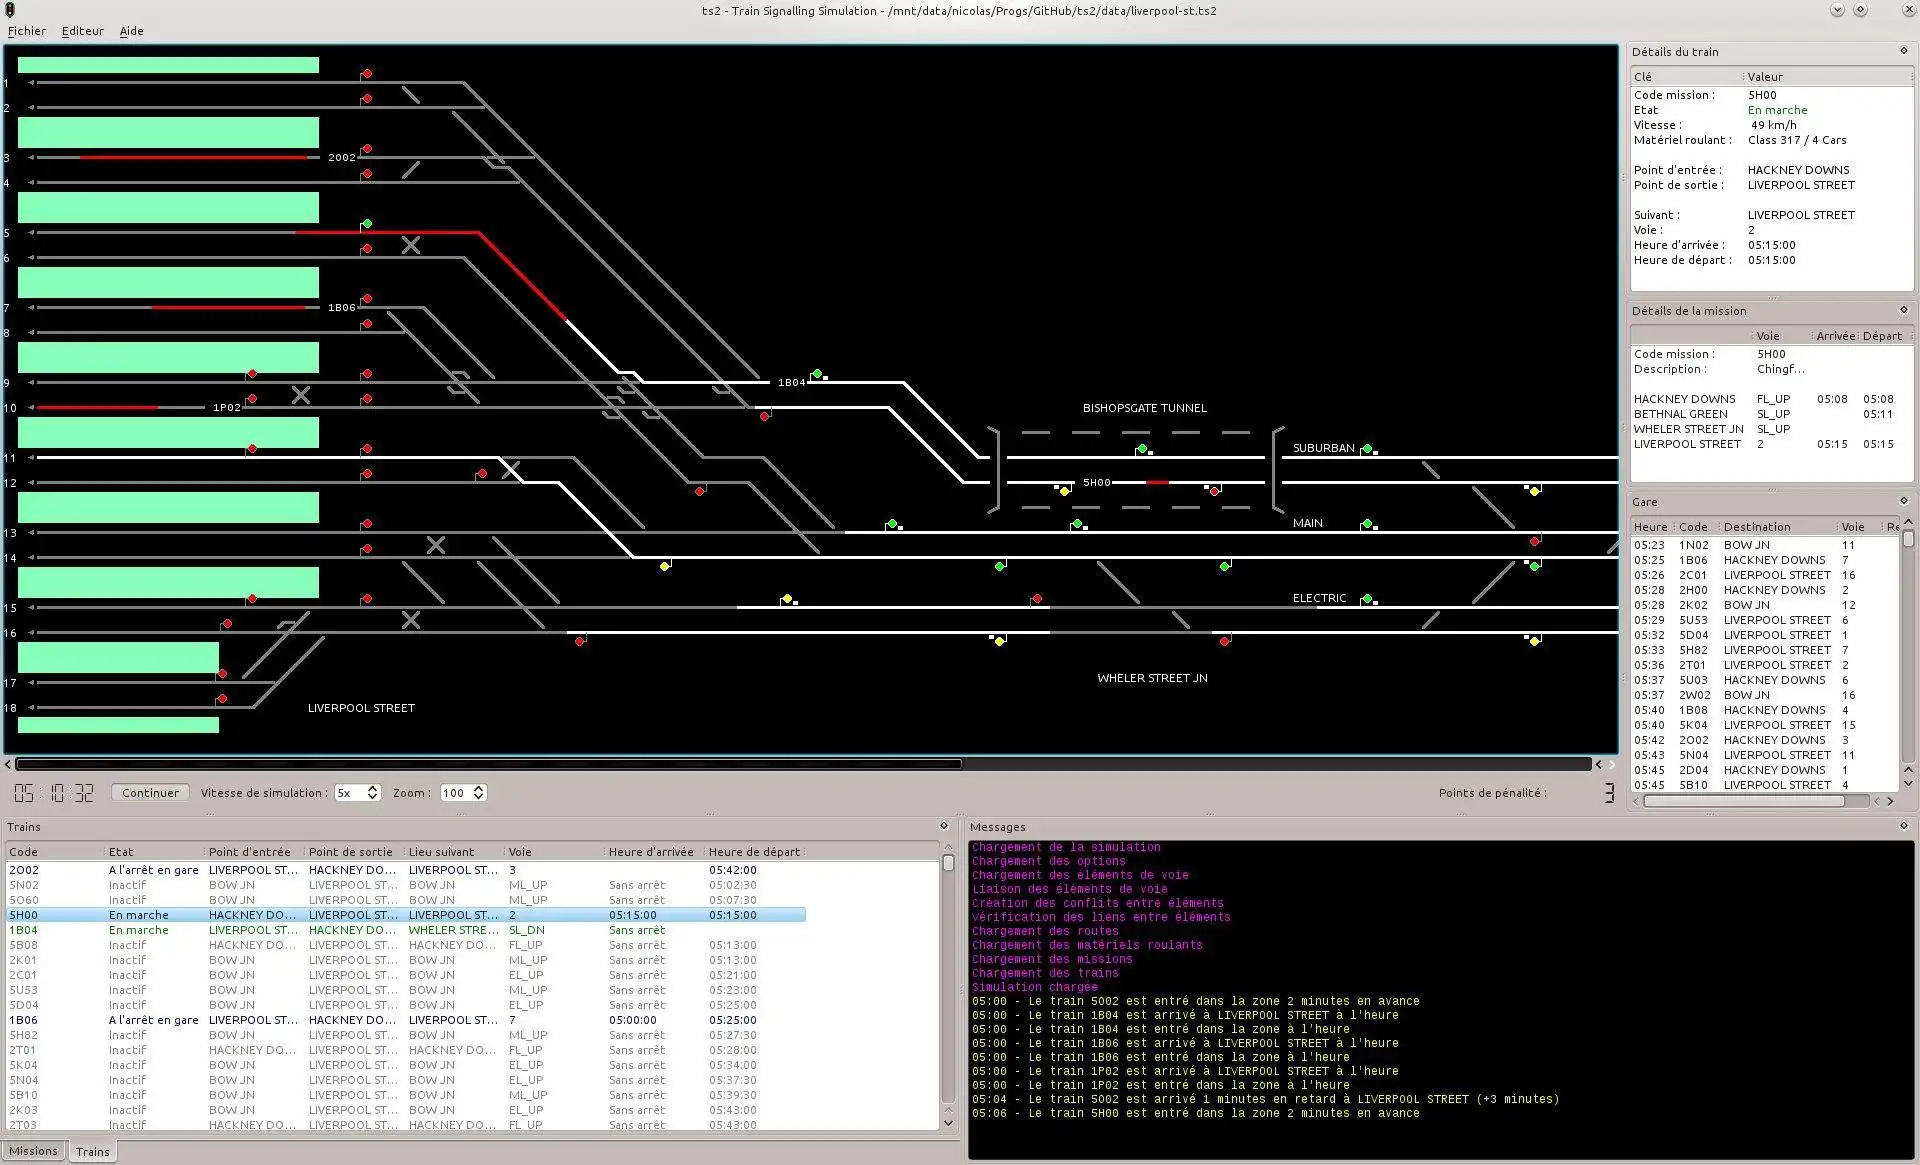 下载 Web 工具或 Web 应用程序 Train Signaling Simulation 以在 Linux 中在线运行